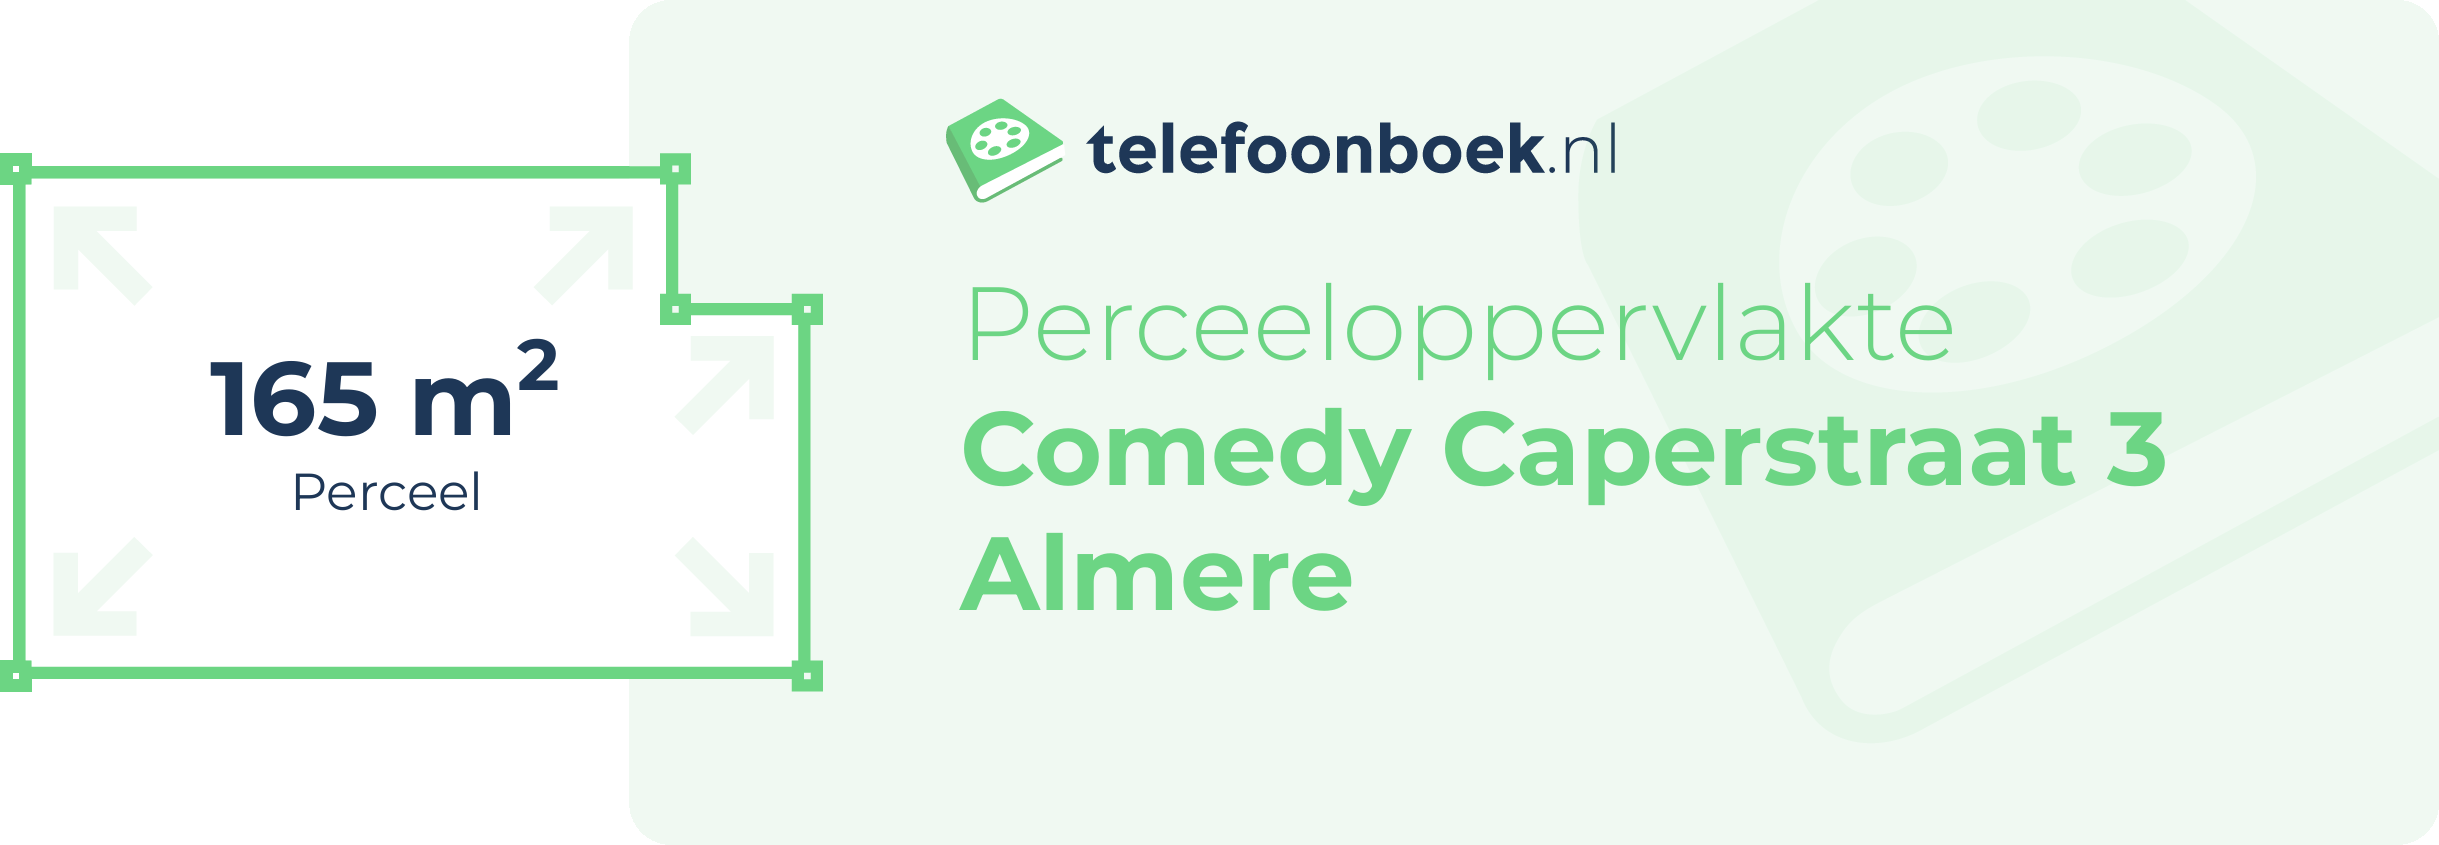 Perceeloppervlakte Comedy Caperstraat 3 Almere